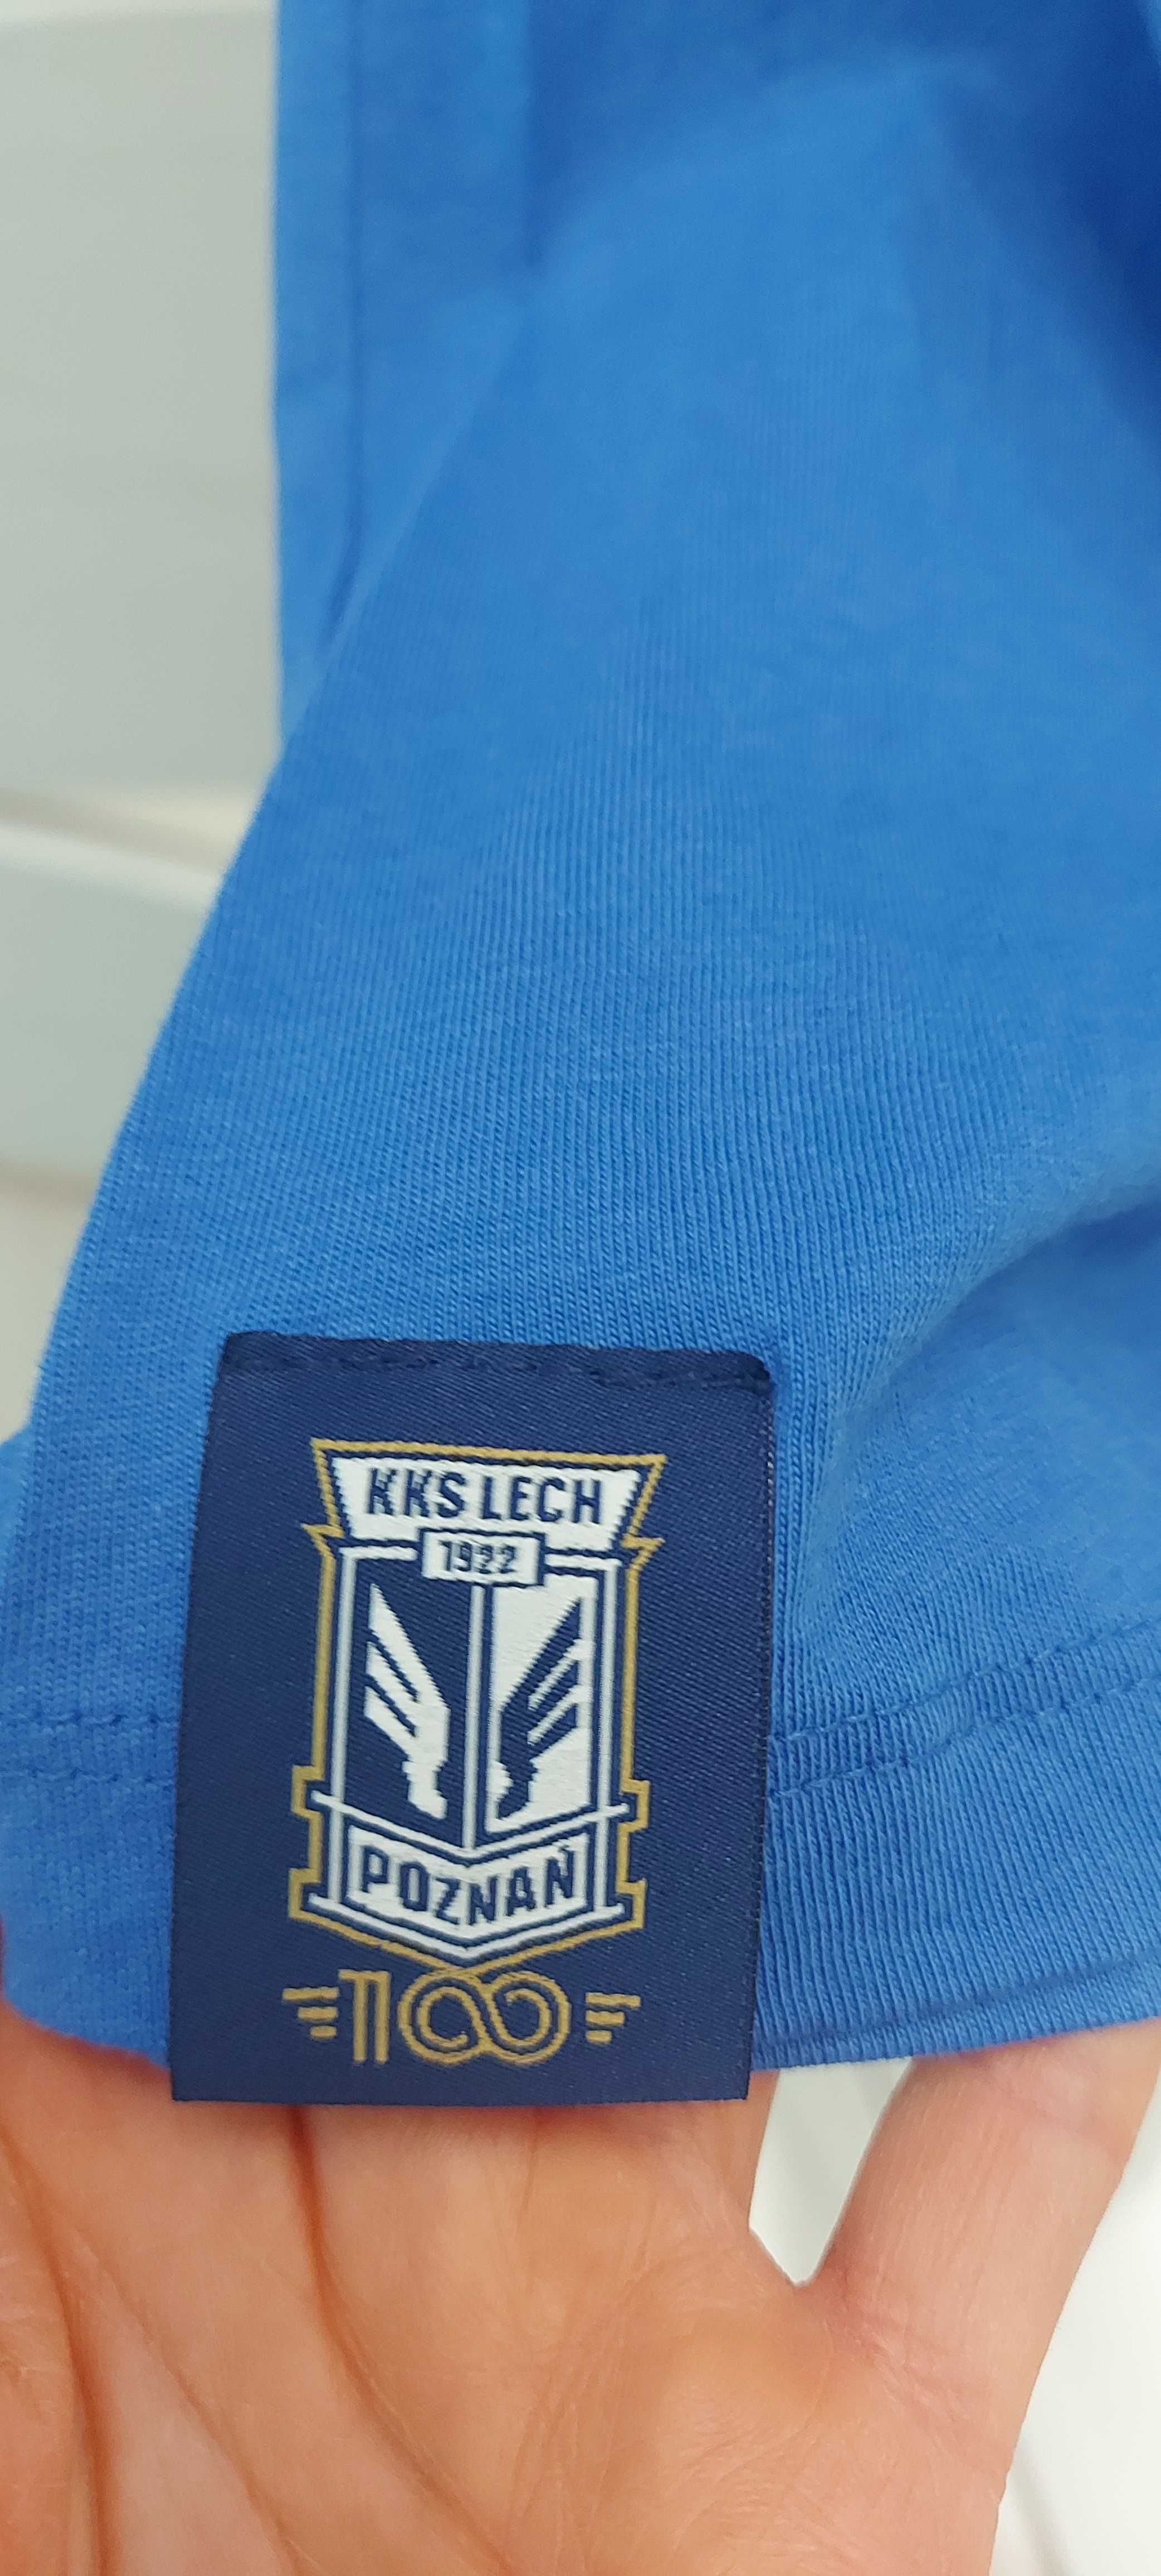 Koszulka damska kibica Lech Poznań rozmiar S